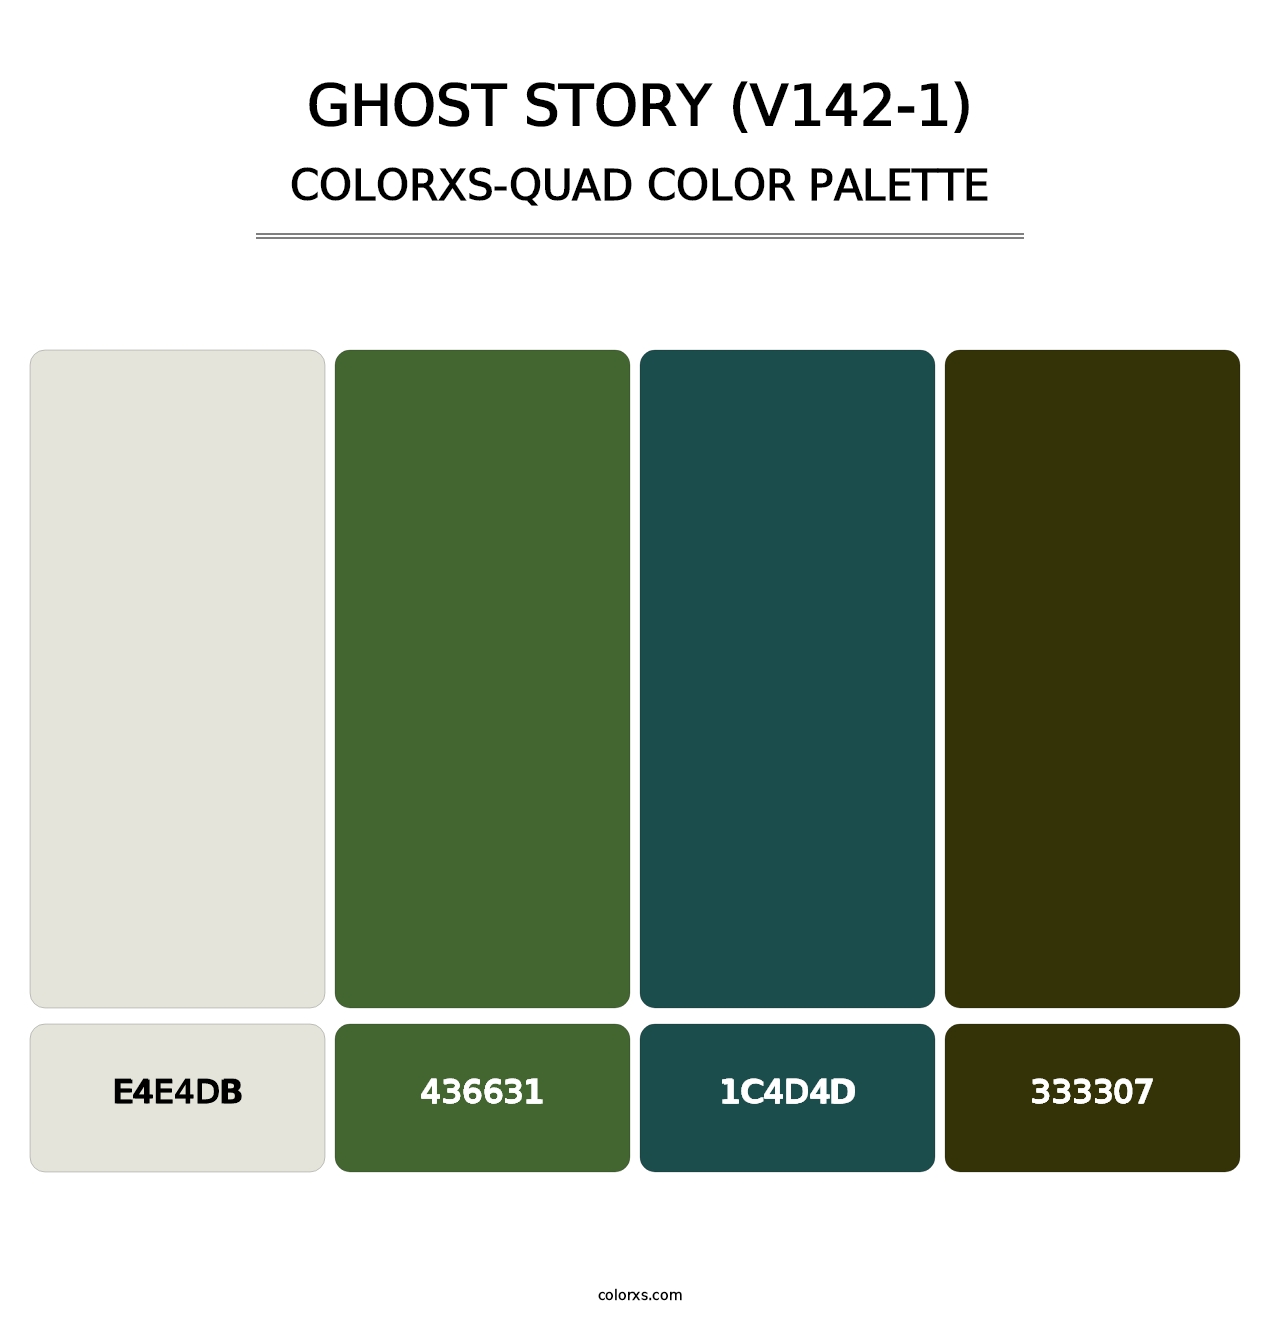 Ghost Story (V142-1) - Colorxs Quad Palette